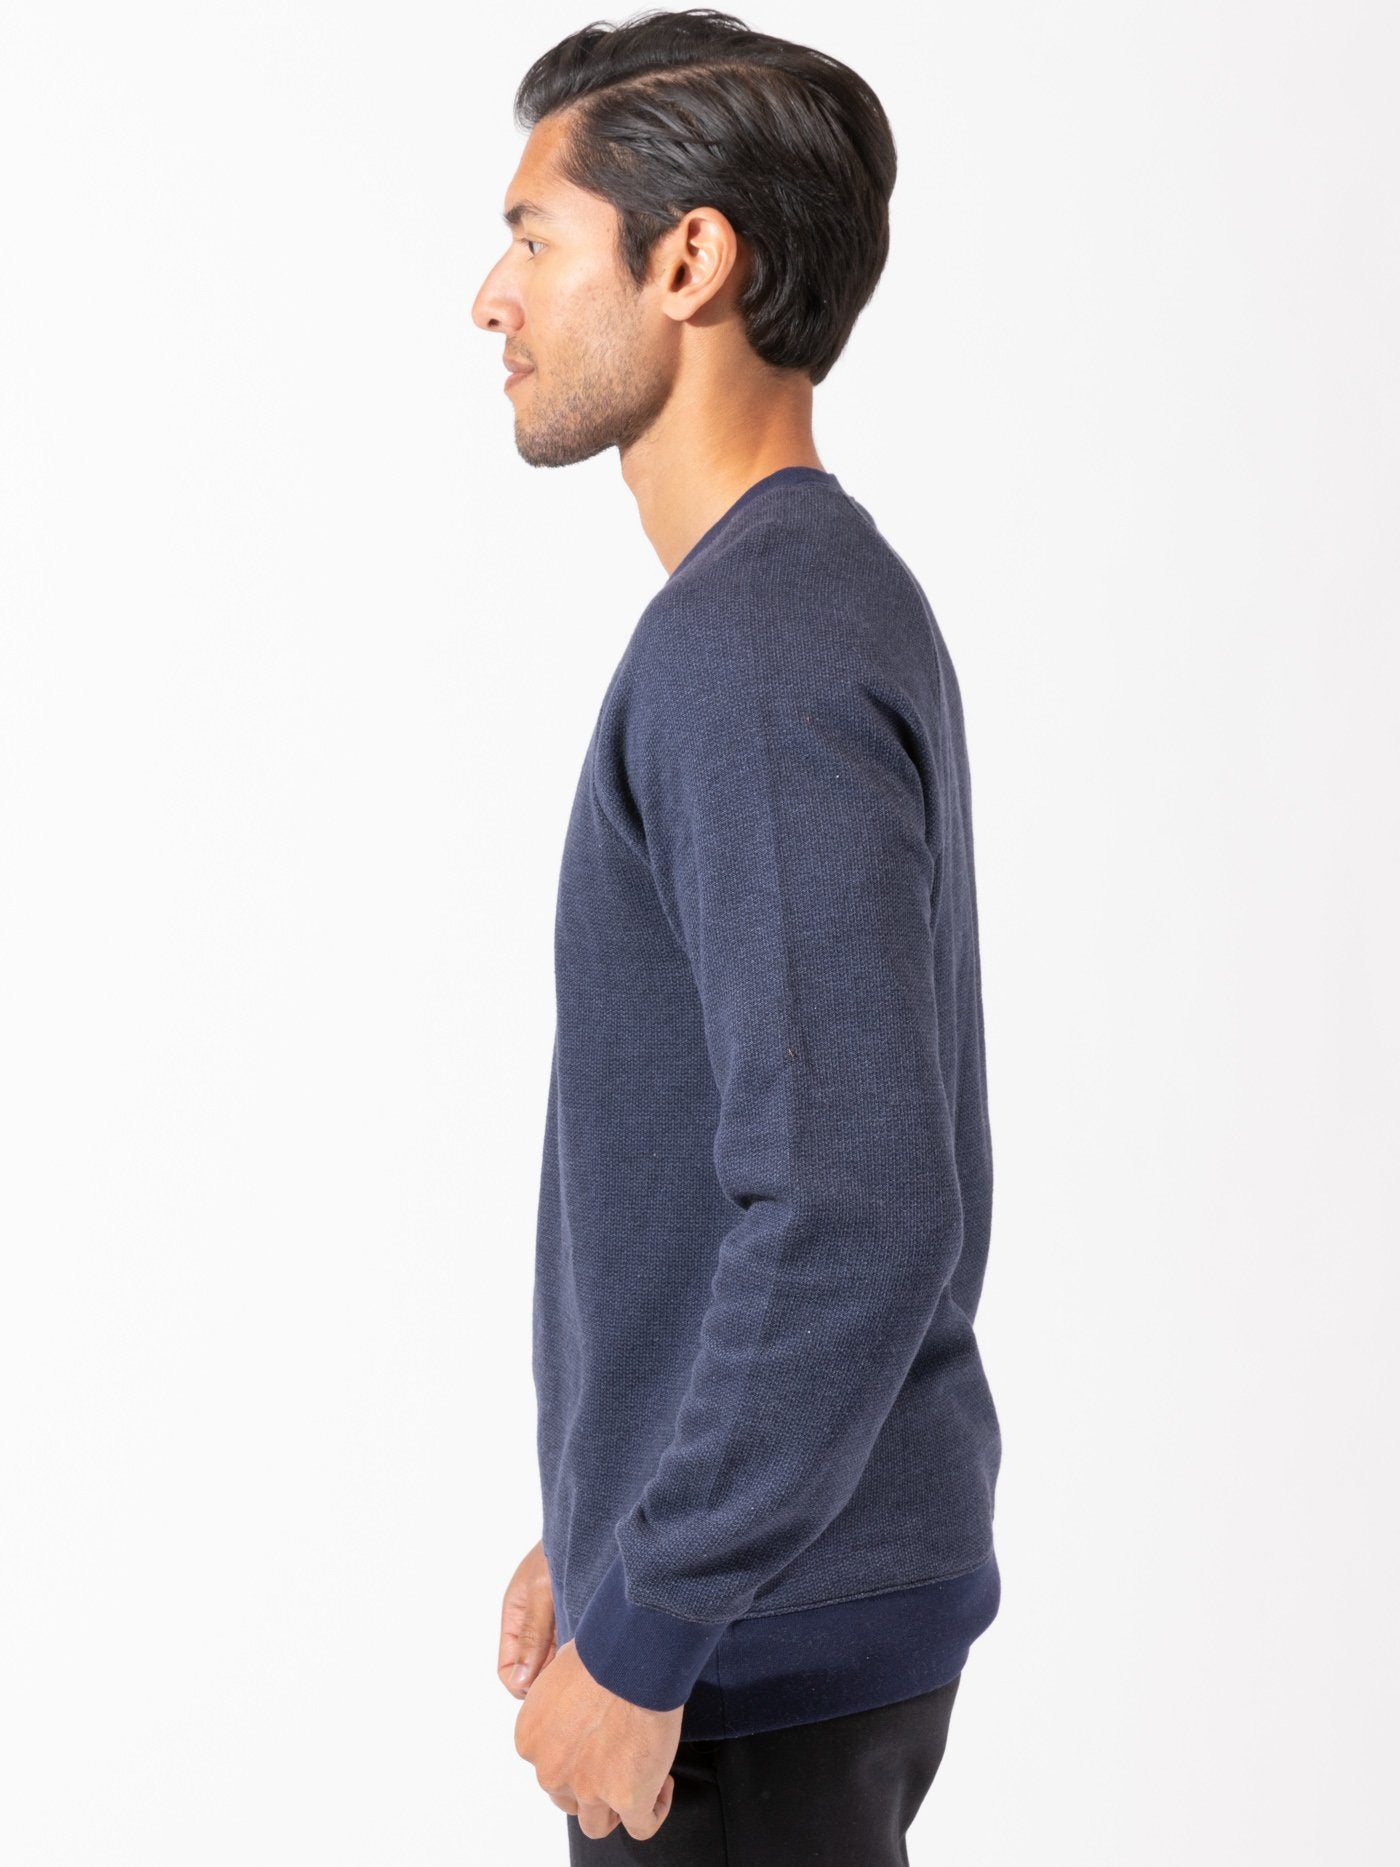 Samuel Yarn Dye Fleece Pullover Mens Outerwear Sweatshirt Threads 4 Thought 